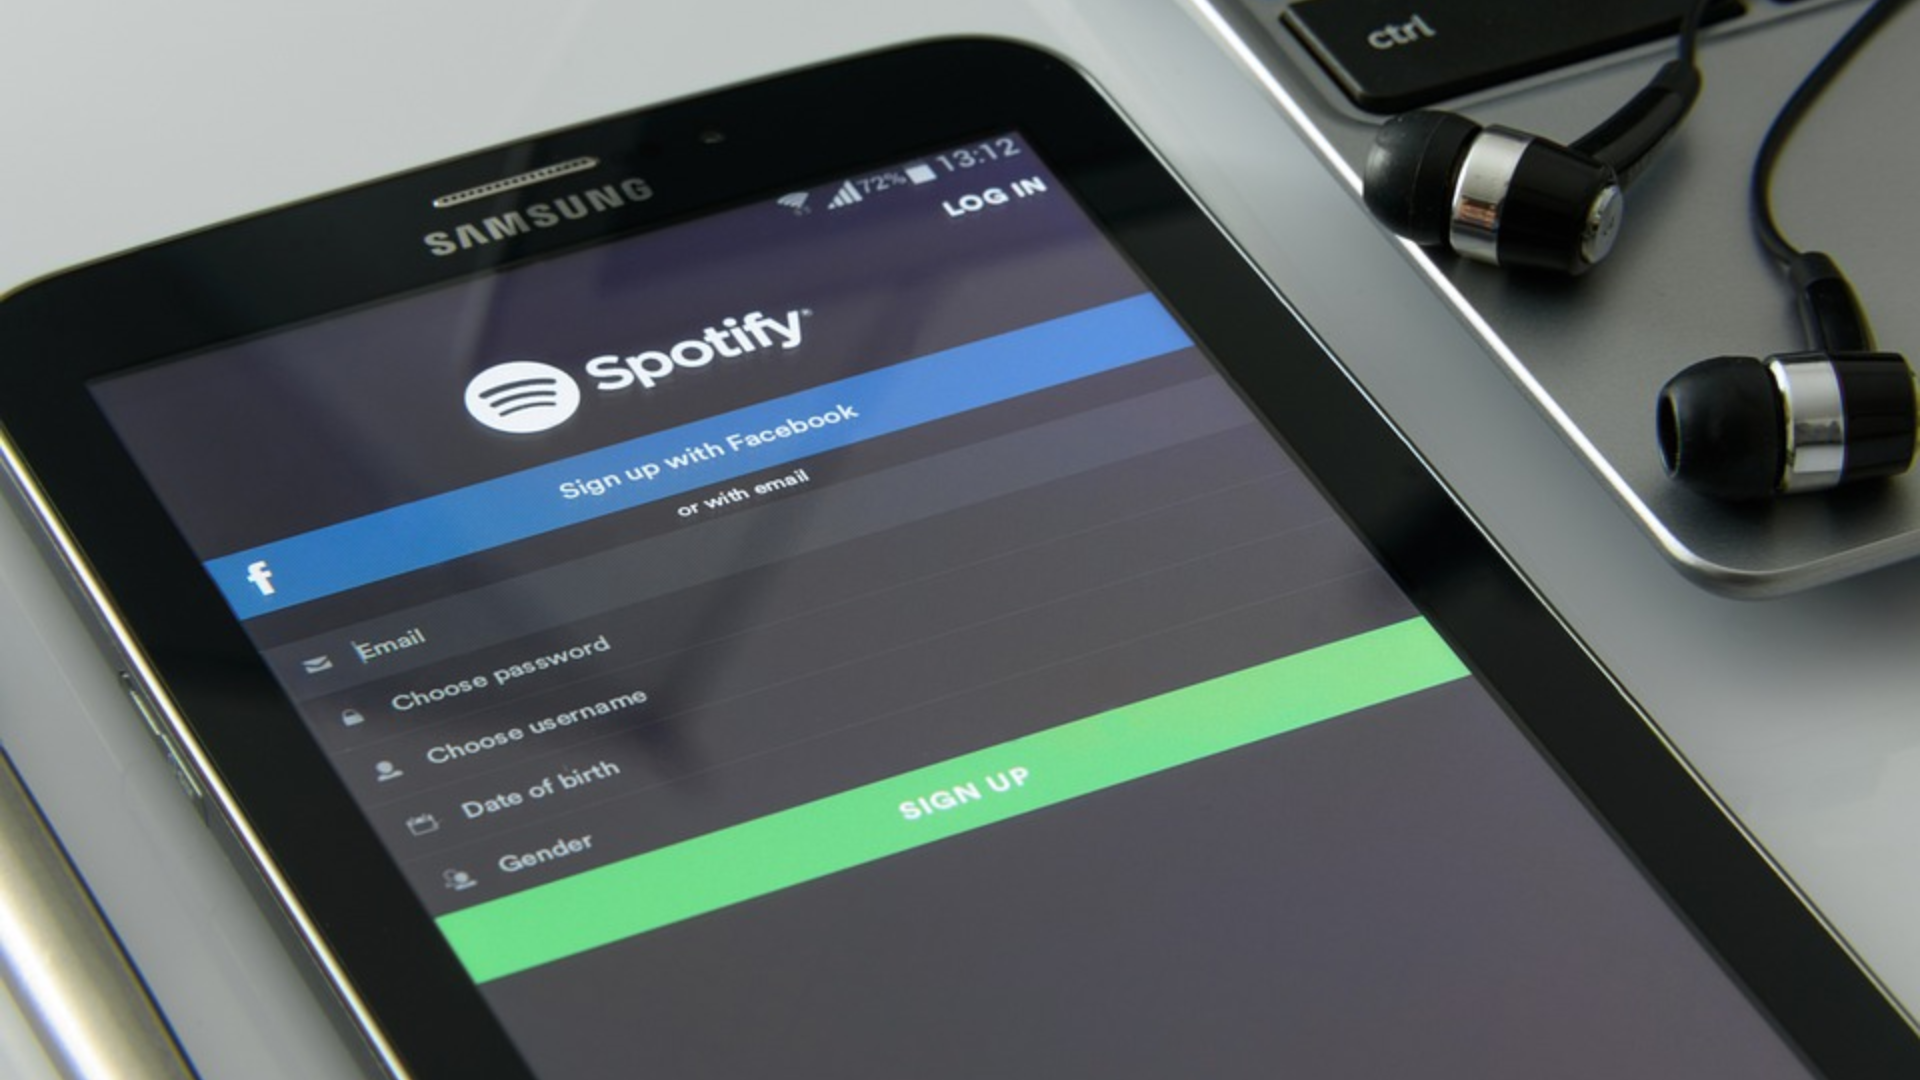 Tentang Spotify Premium Mod Apk